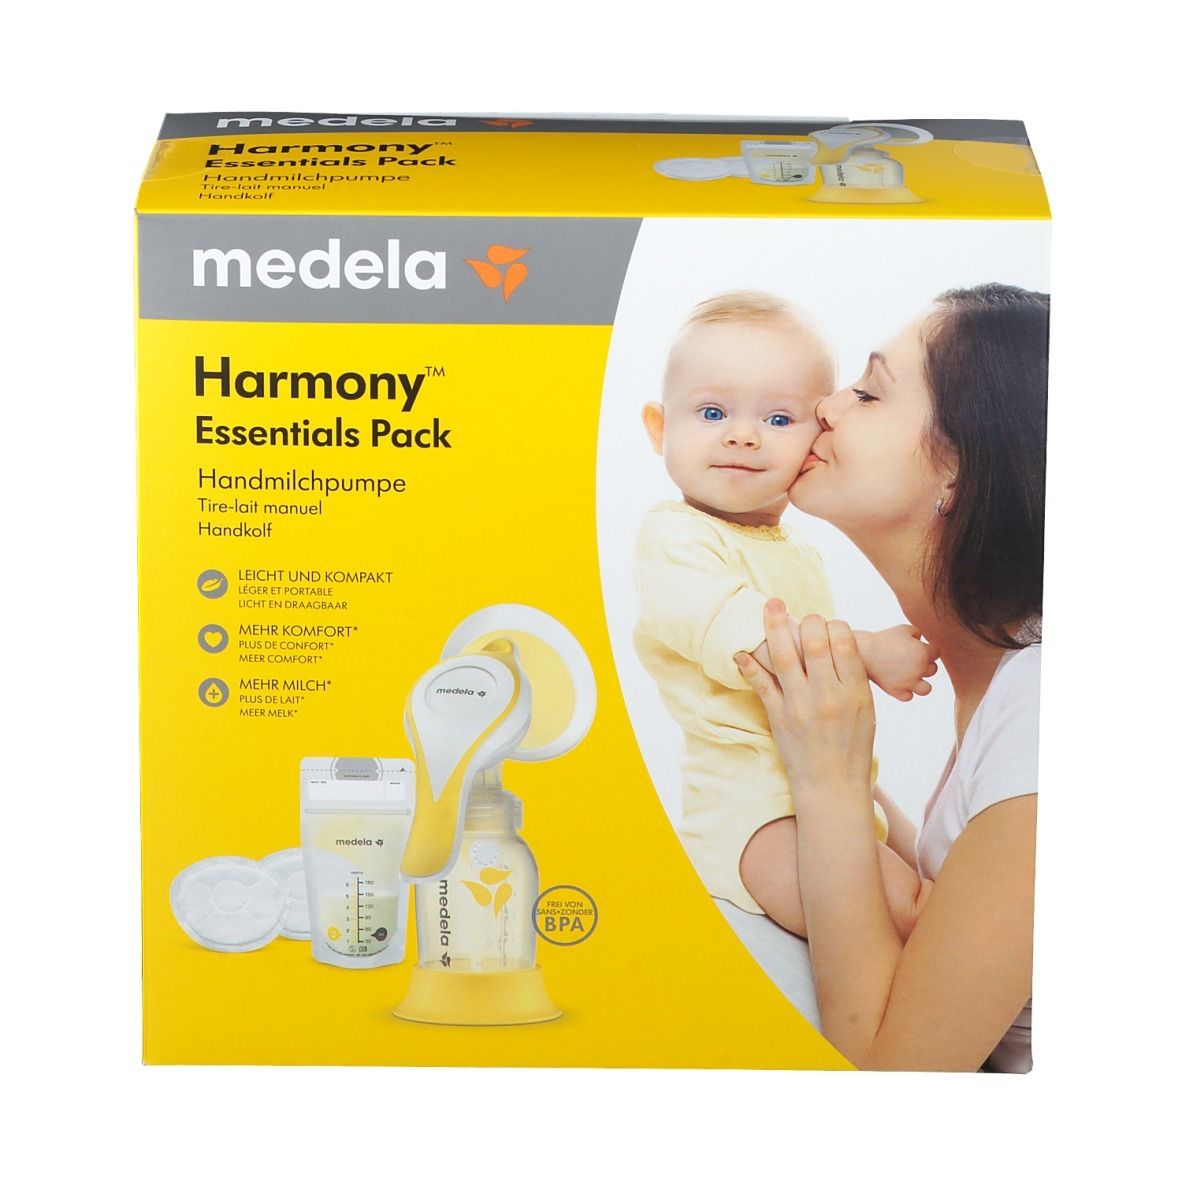 medela Harmony™ Essentials Pack